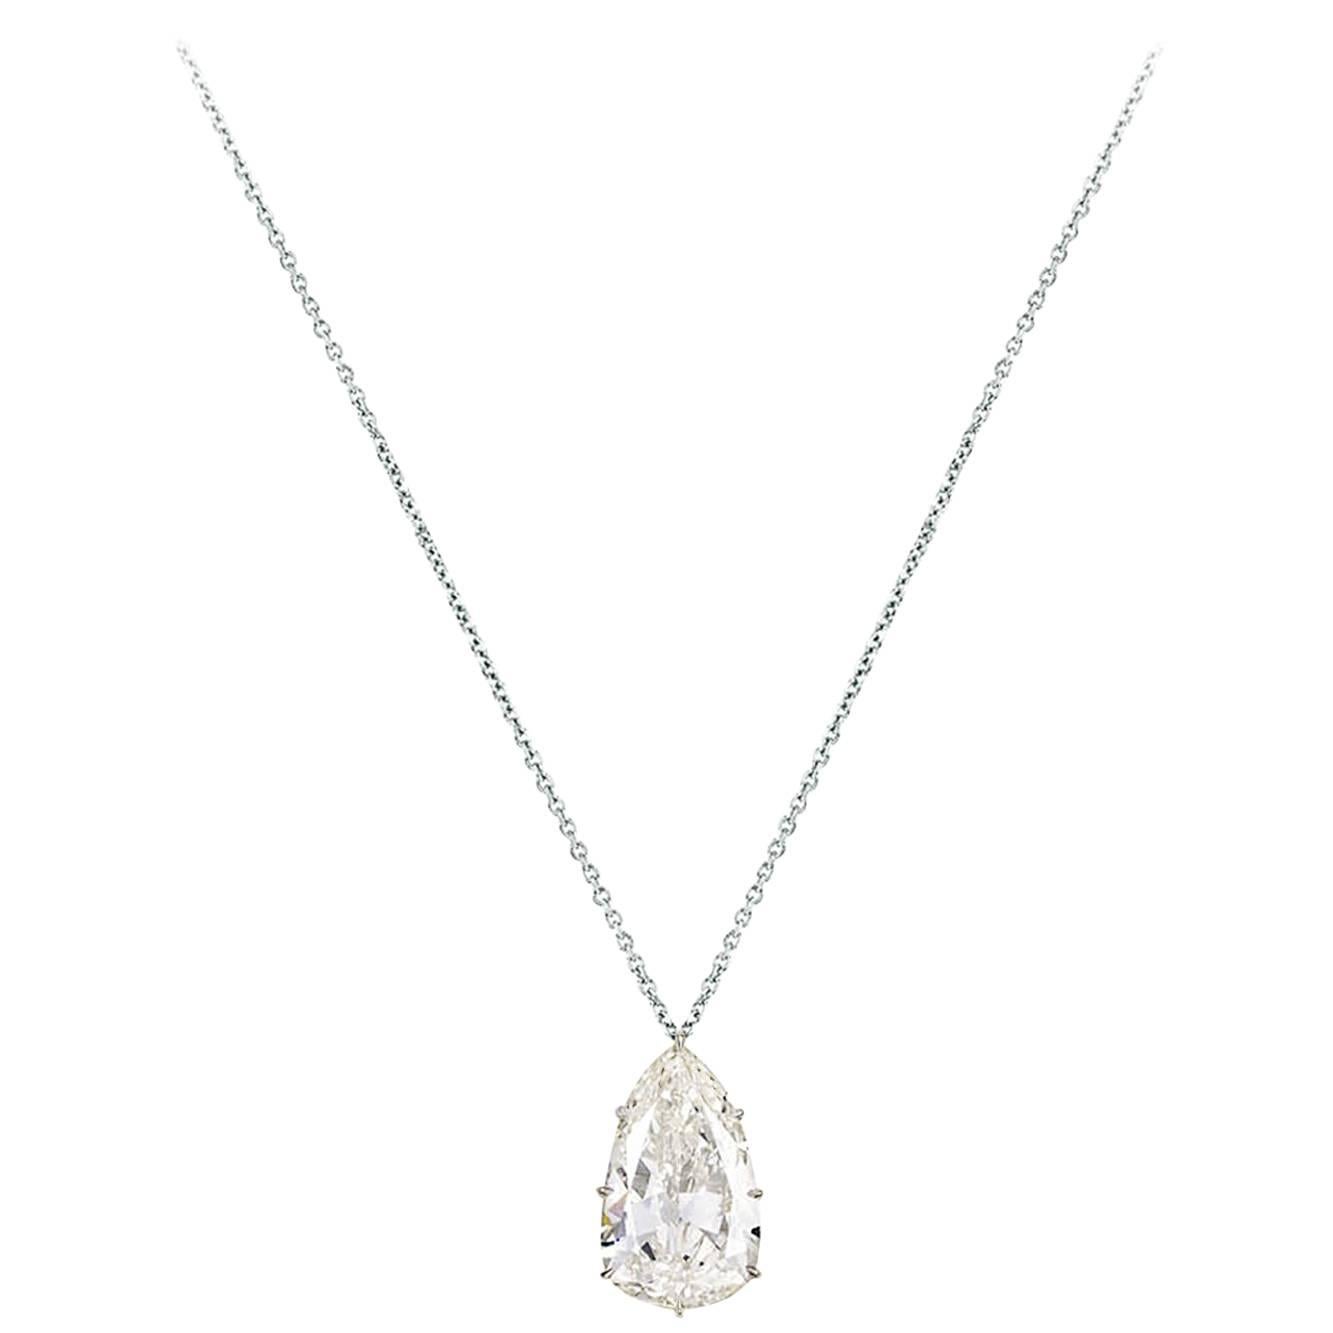 1.14 Carat Heart Shape Diamond Solitaire Pendant Necklace For Sale at ...